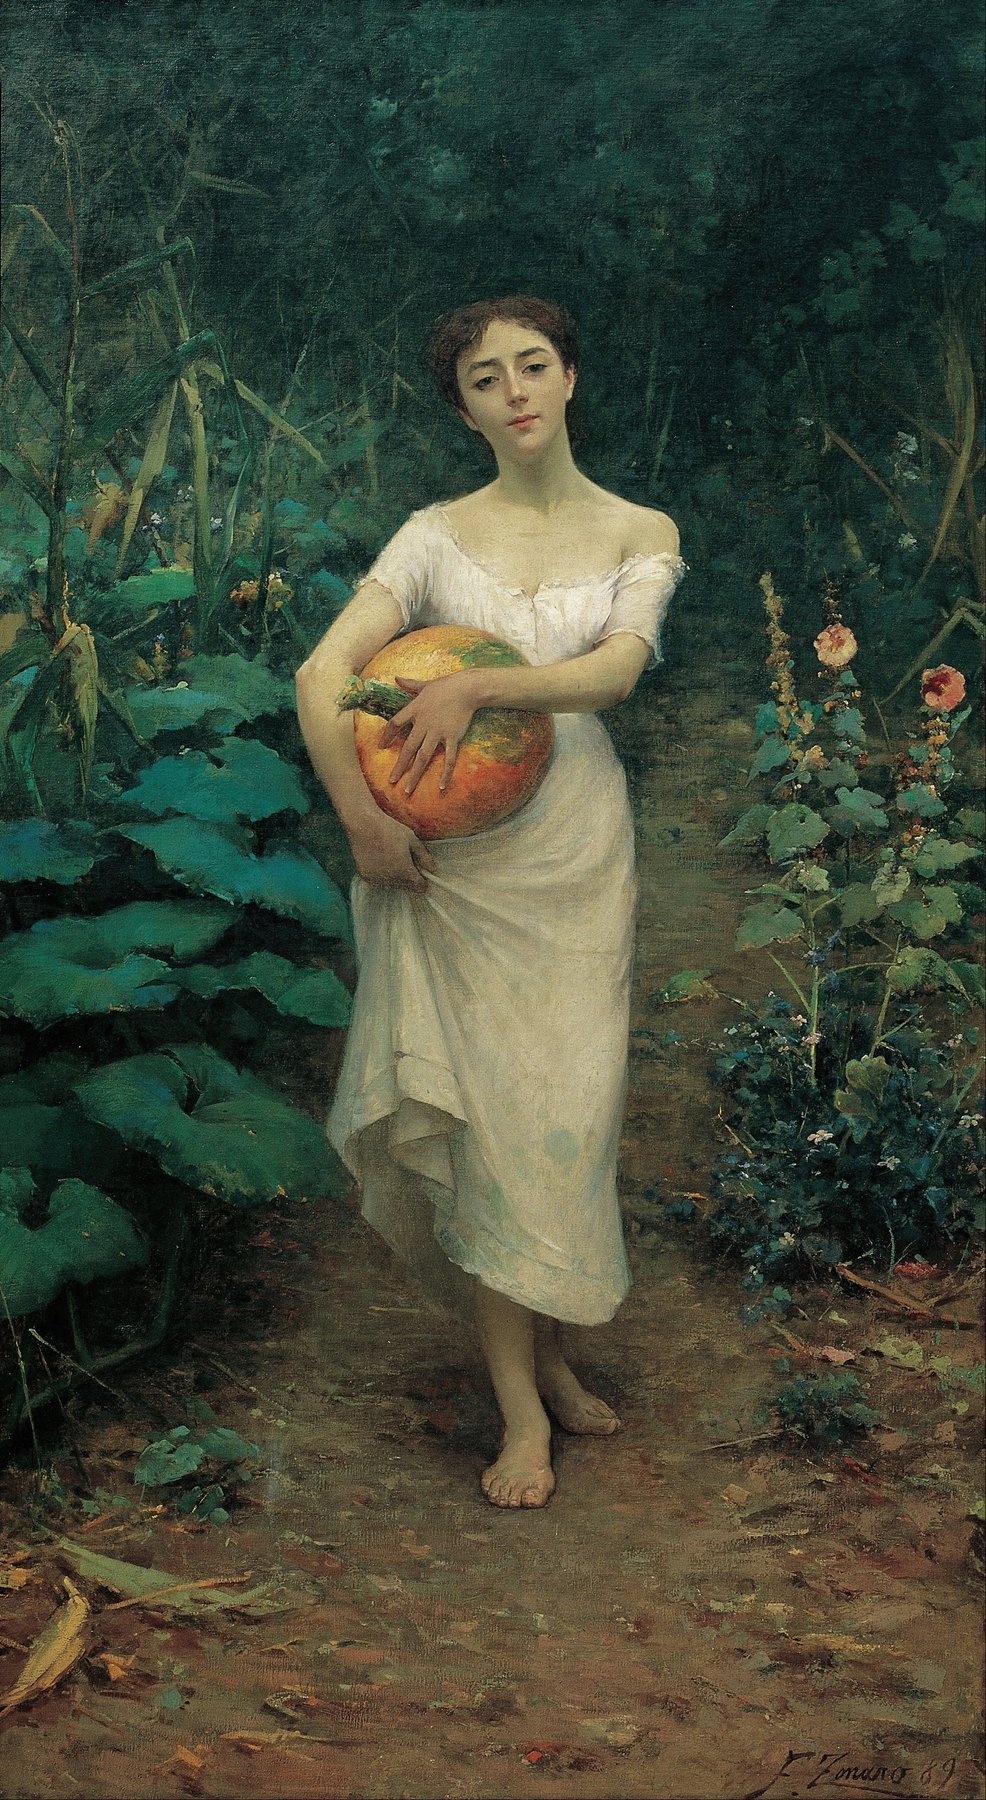 Young Girl Carrying a Pumpkin (1889)